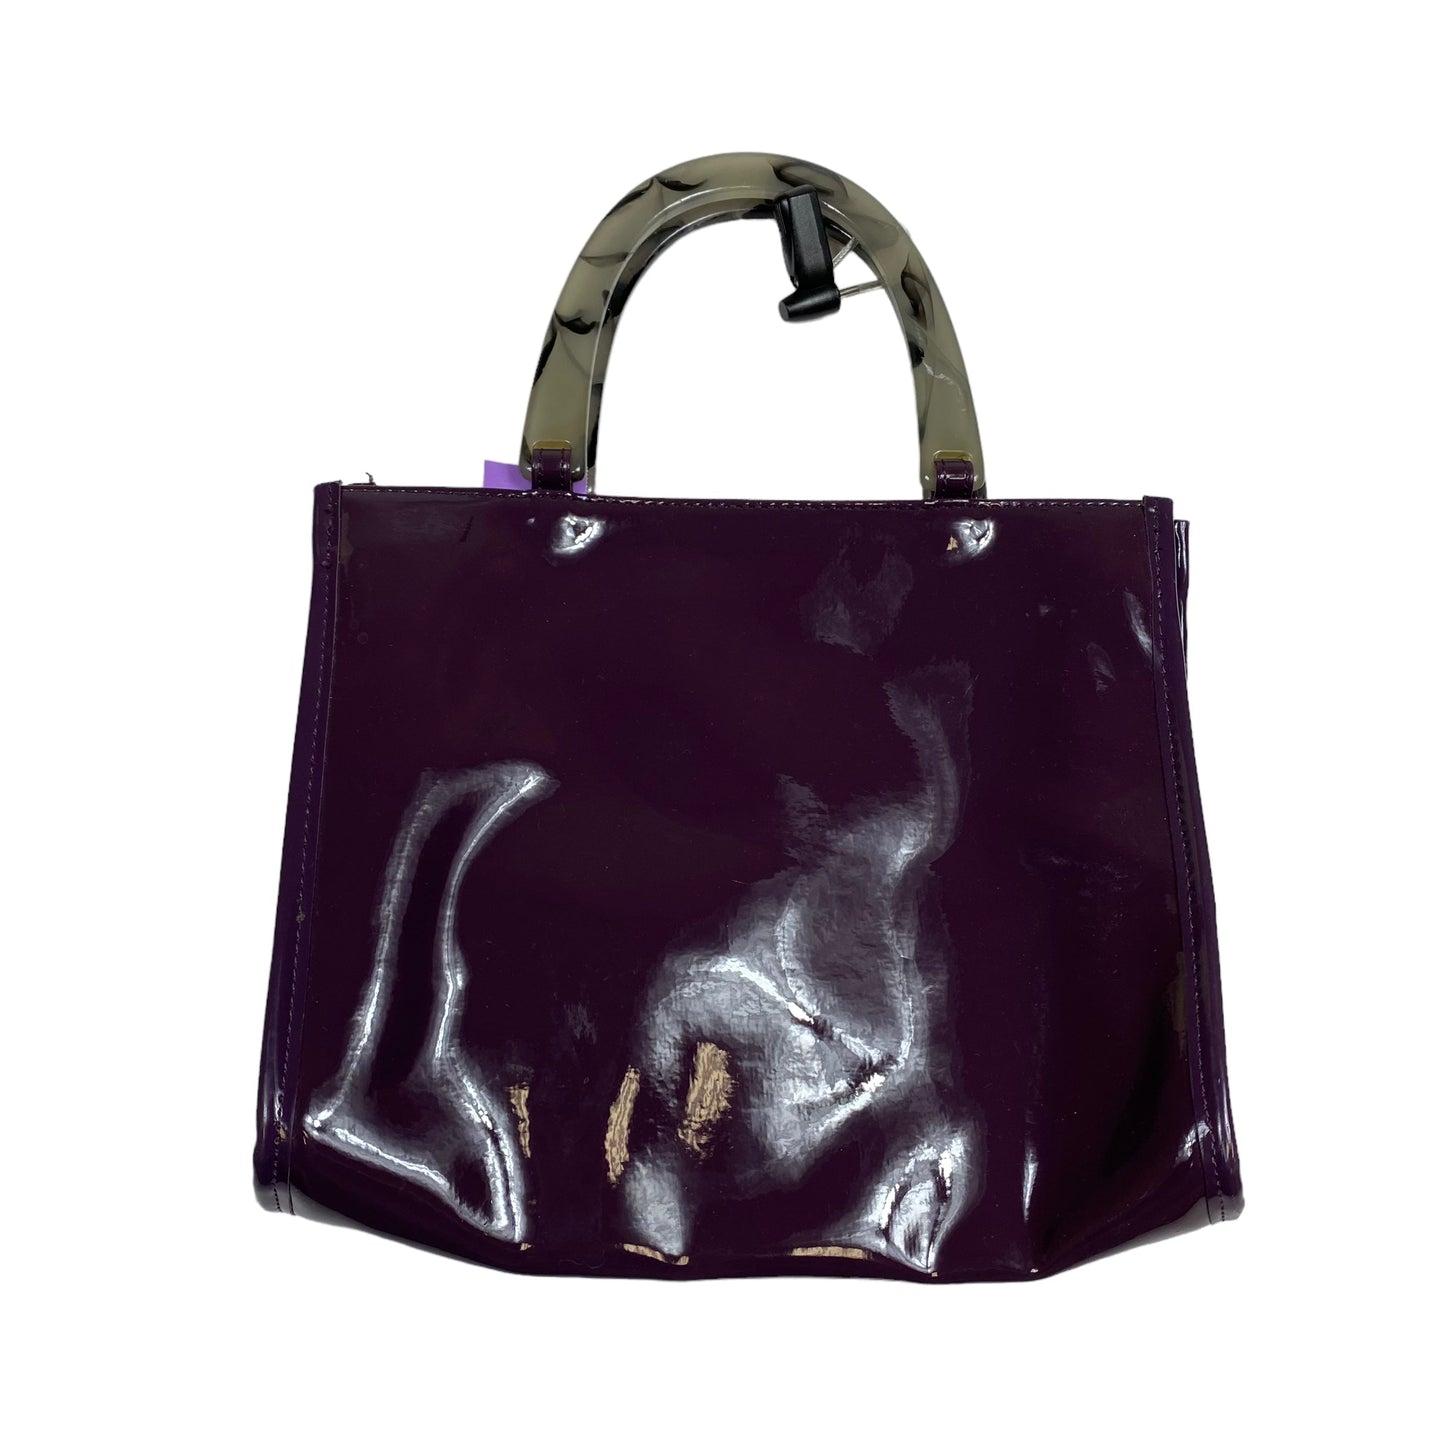 Handbag By Neiman Marcus  Size: Small